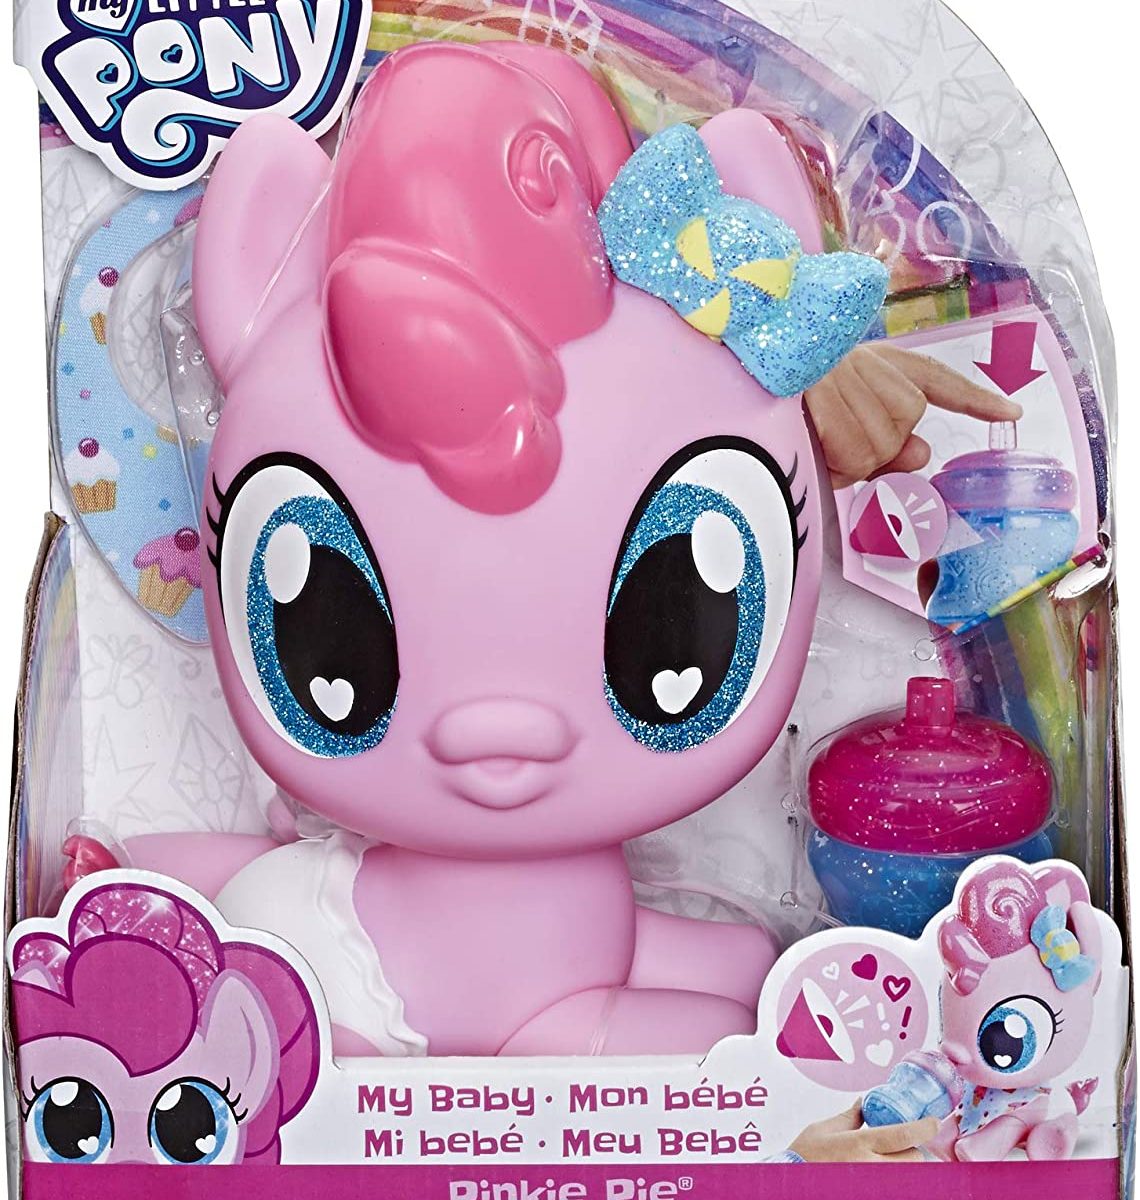 MLP My Baby Pinkie Pie Toy 1